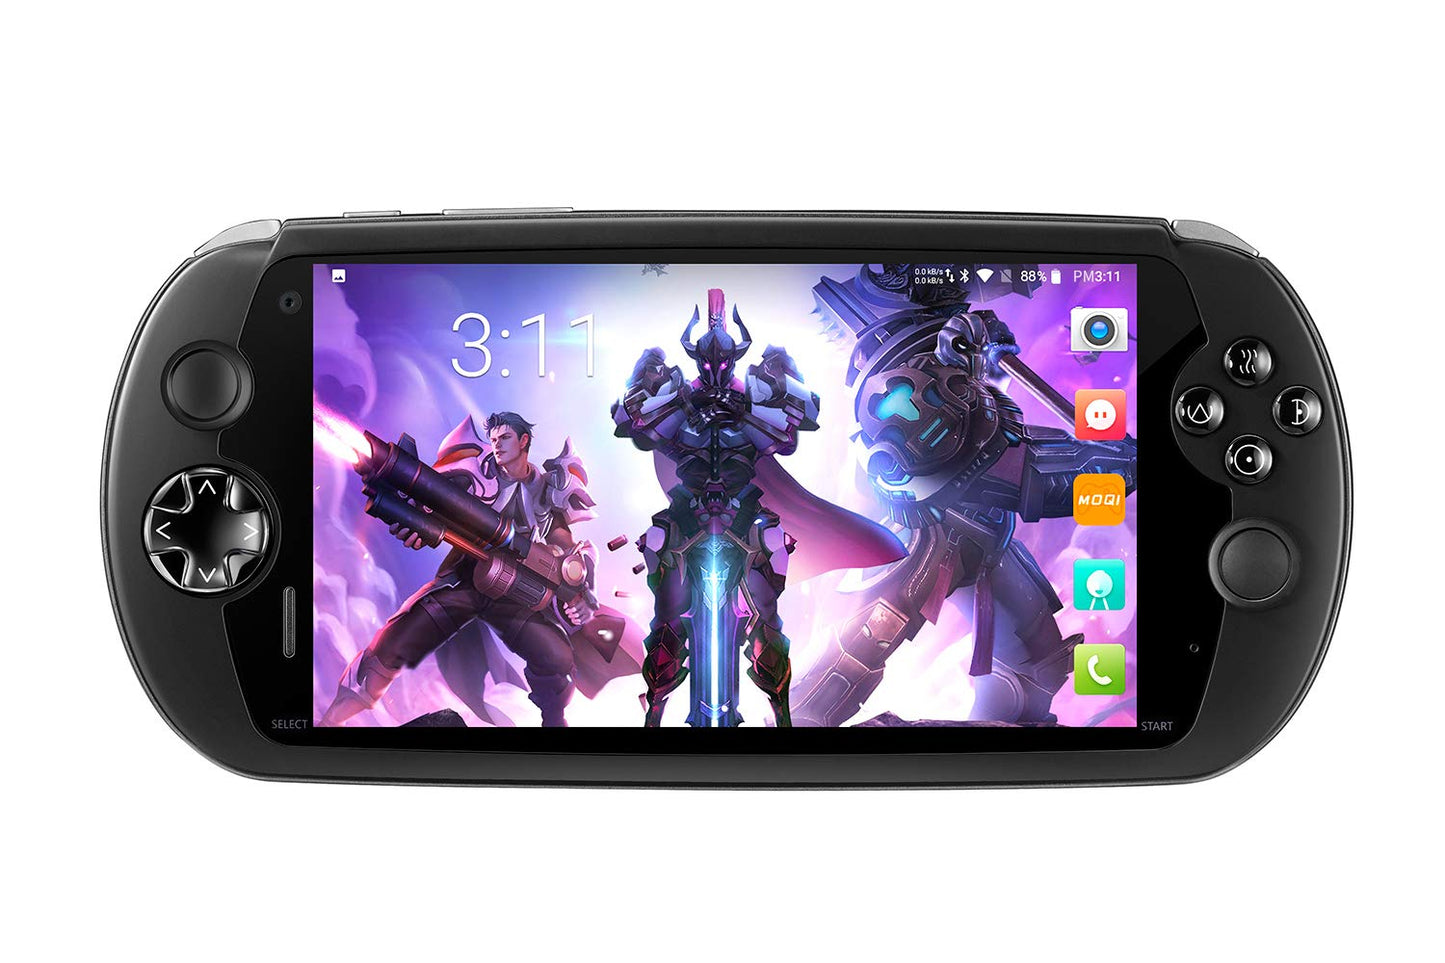 MOQI I7S Game Phone Handheld 6" Touchscreen Game Consola Android 8.1 SDM-710 8-Core Qualcomm Kryo 360 CPU Adreno 616 GPU 6GB RAM 64GB APTX and QC 3.0